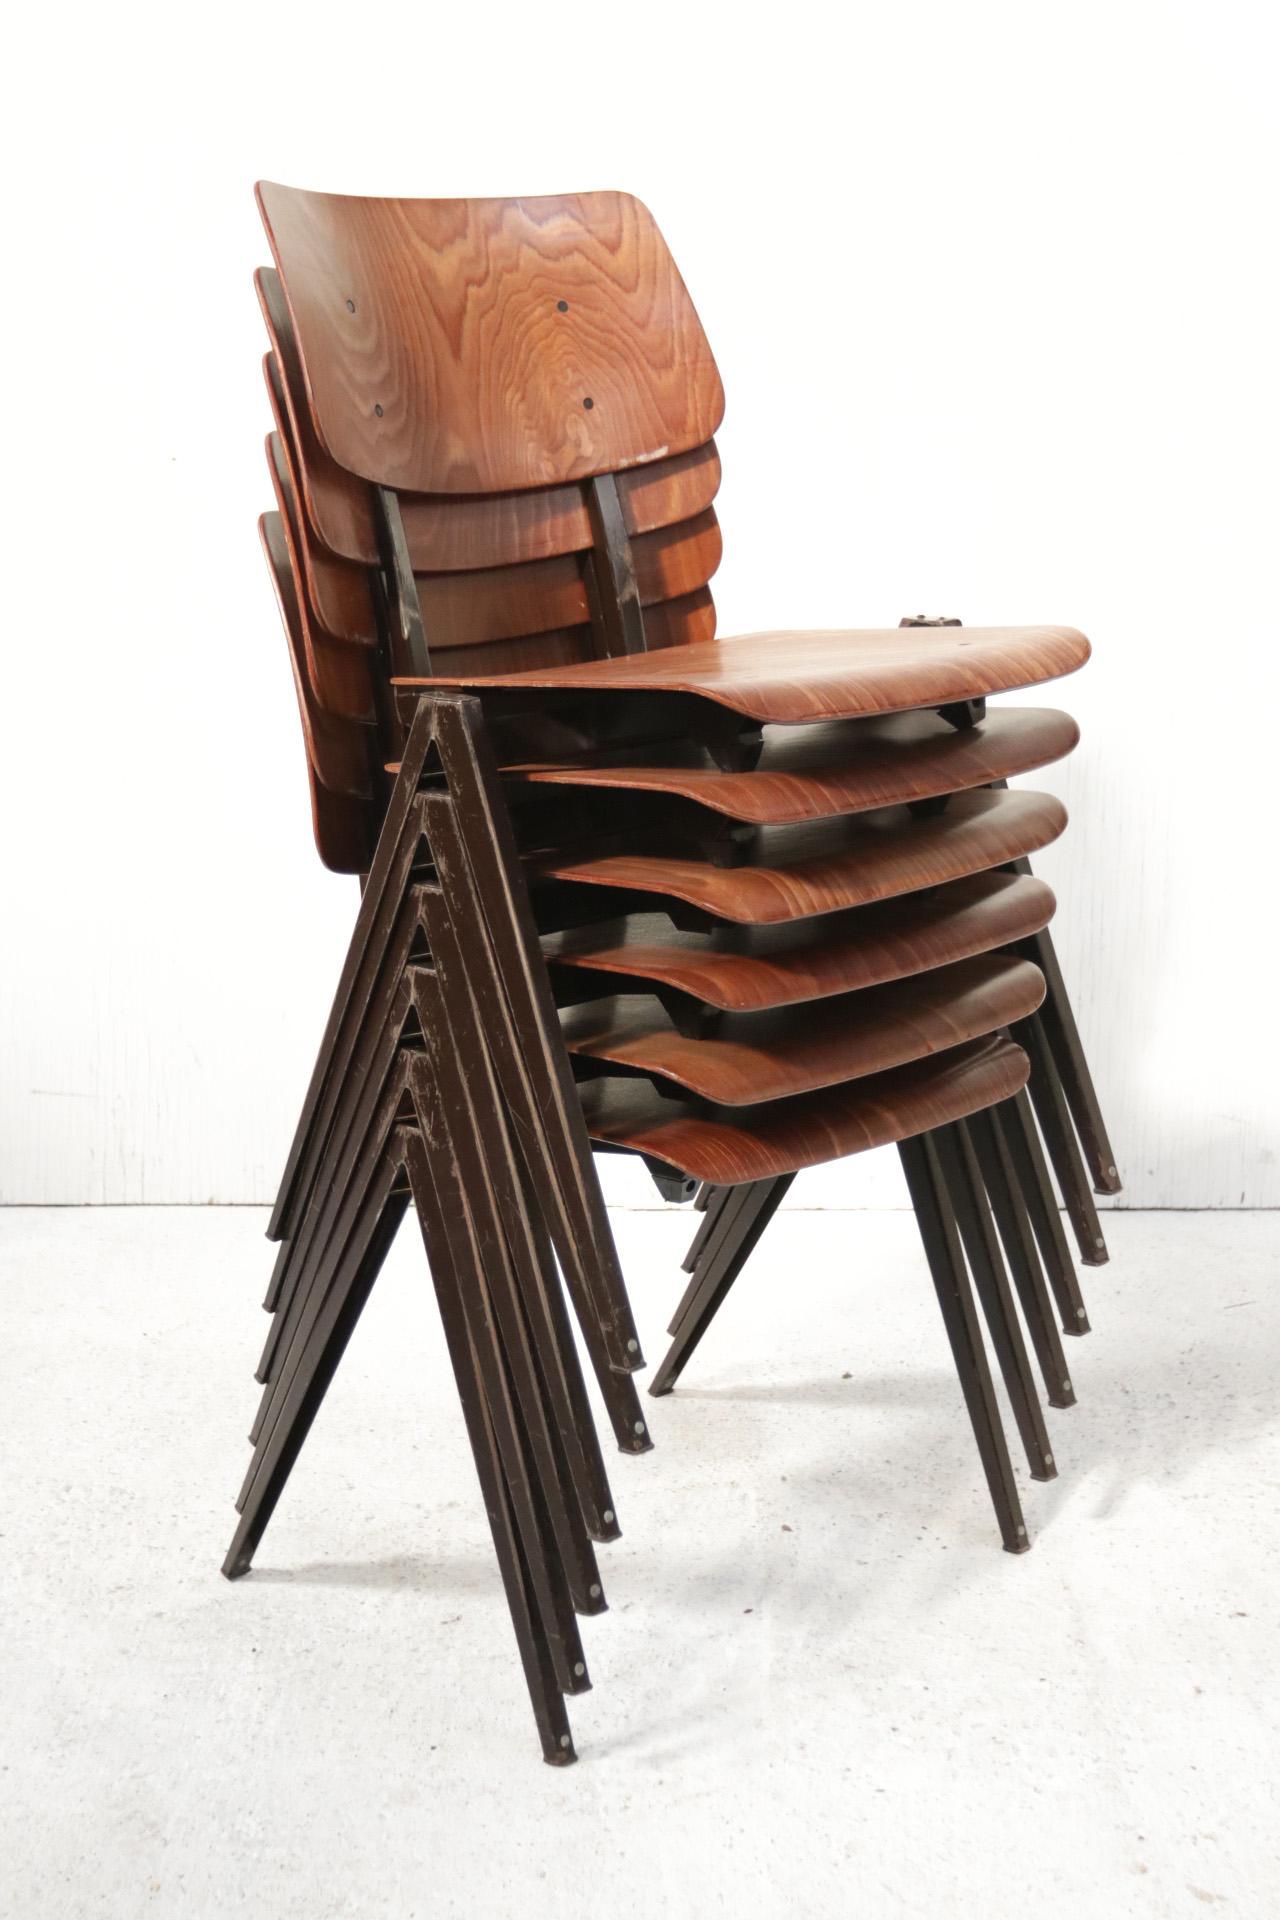 Metal Dutch Industrial Design Prouve Style School Chairs S21 Compas Galvanitas For Sale